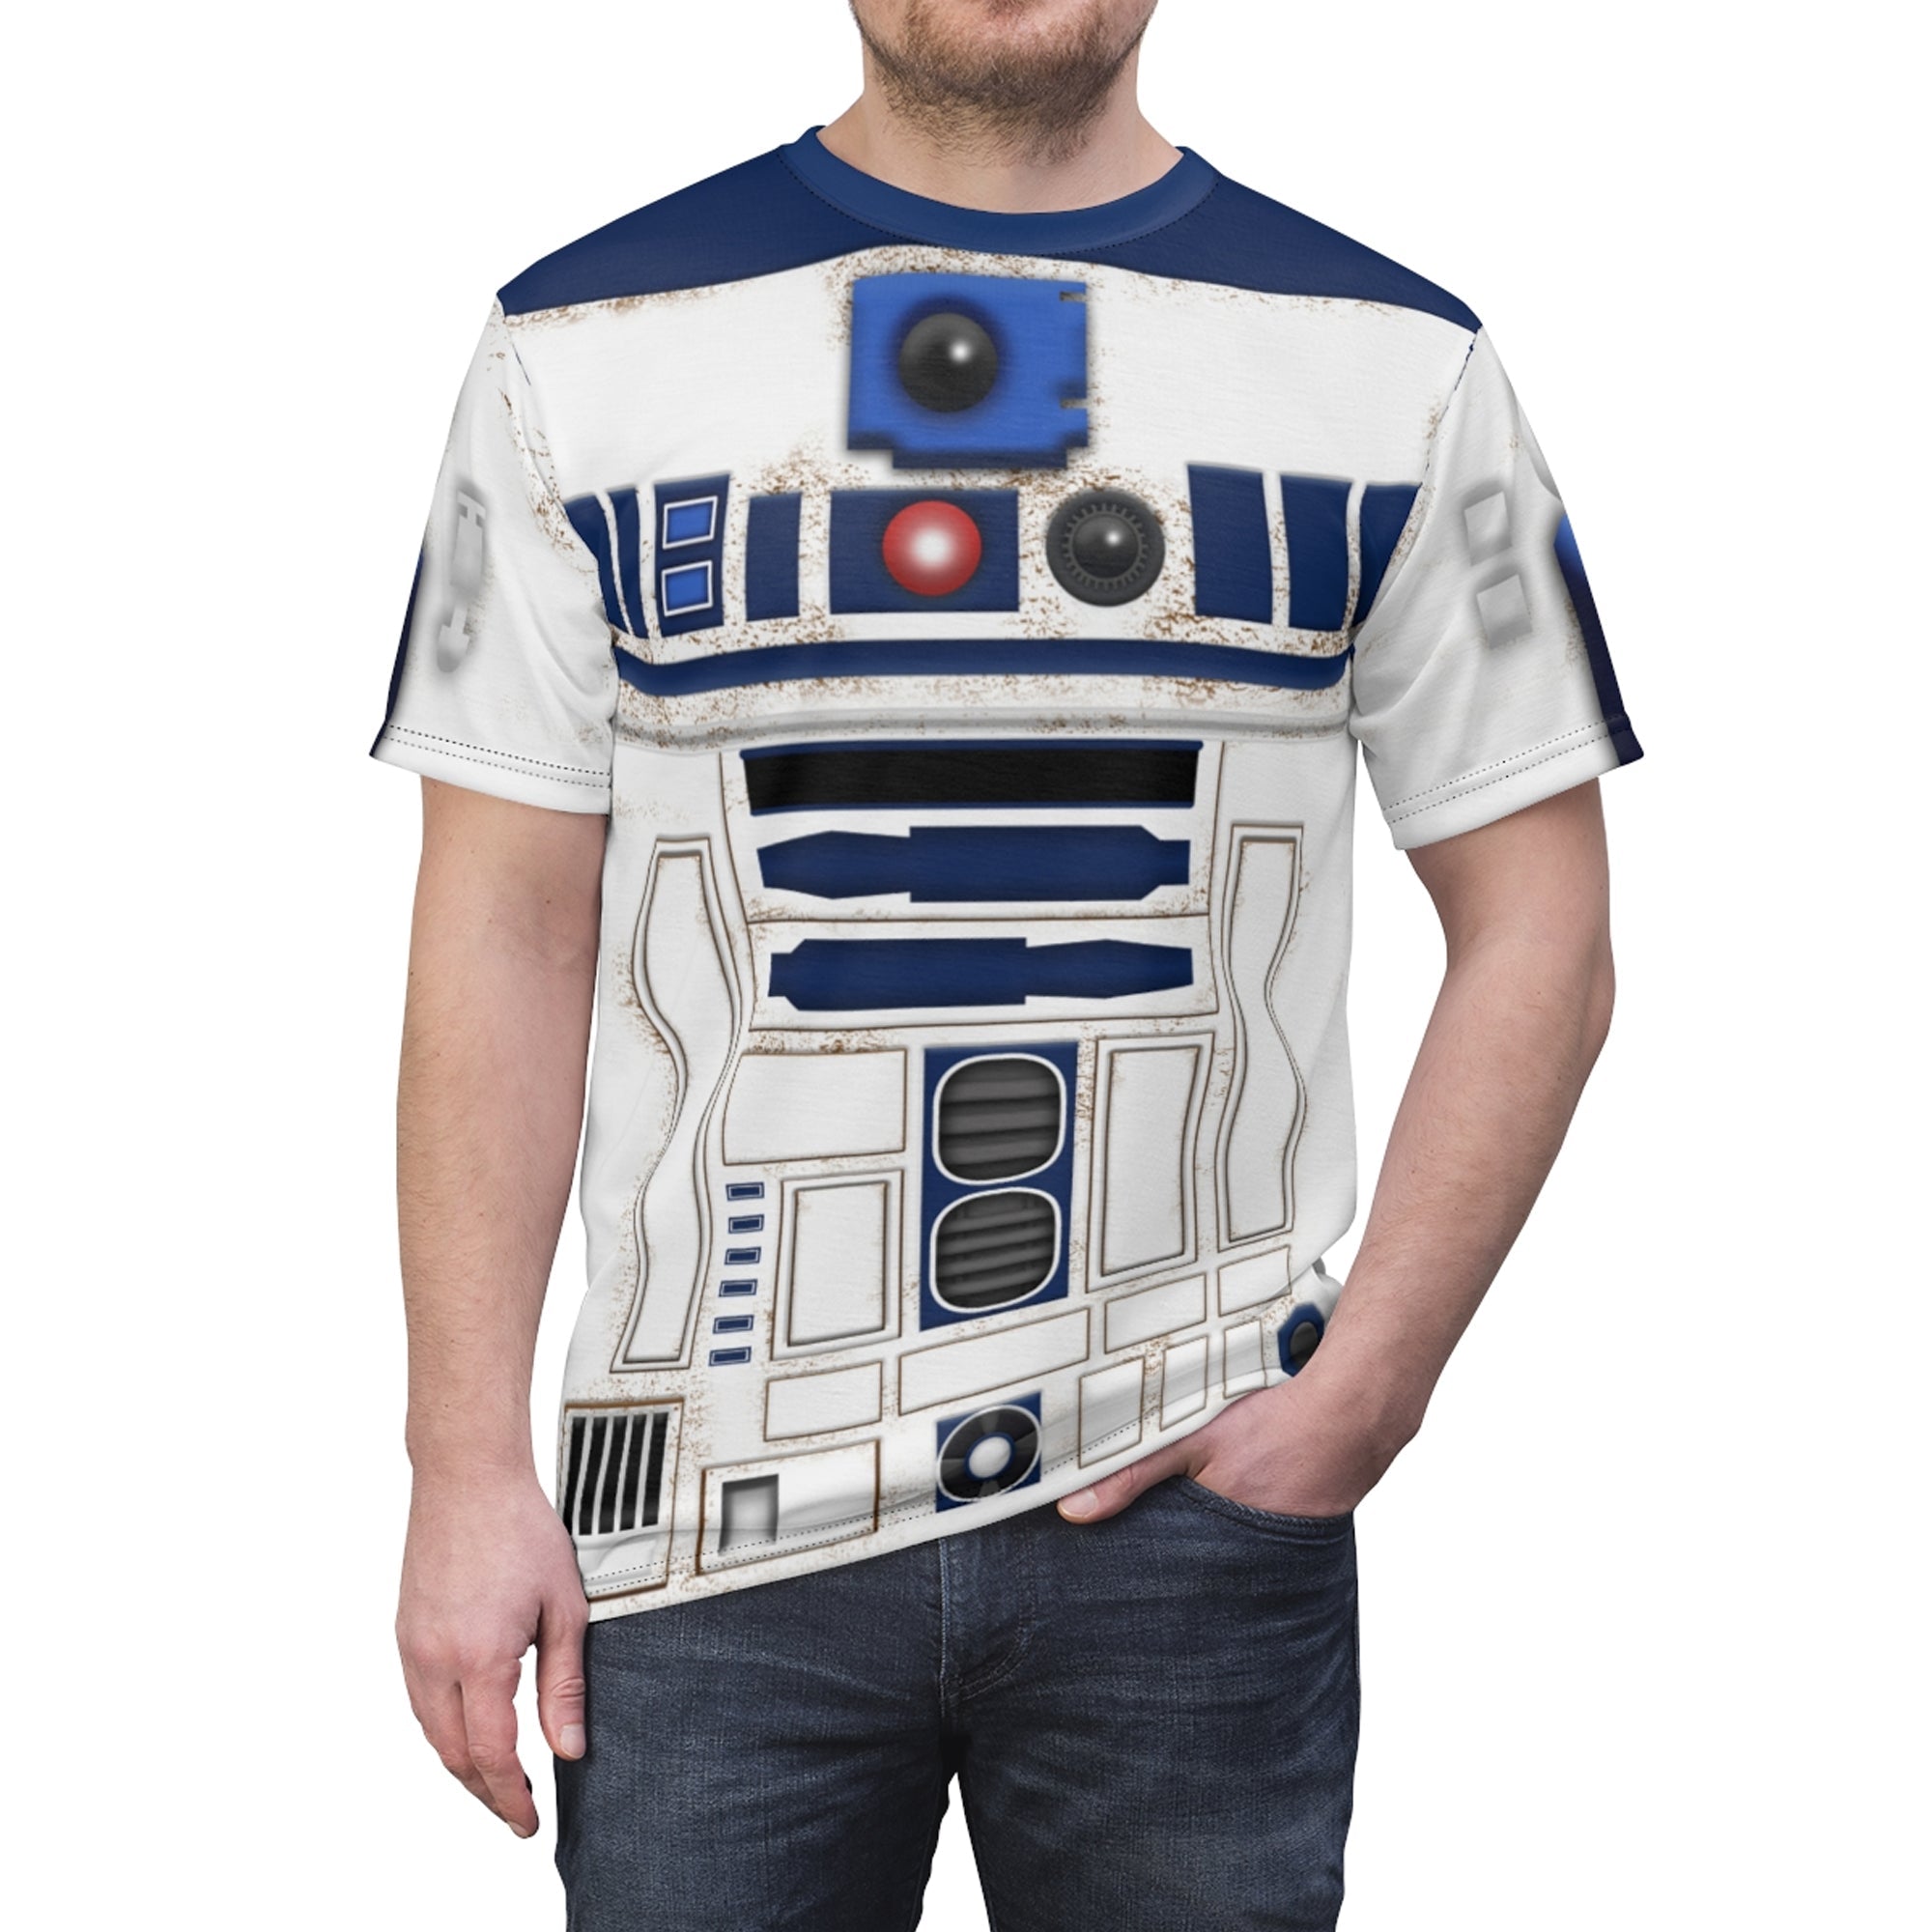 R2D2 Star Wars Costume T-shirt For Men